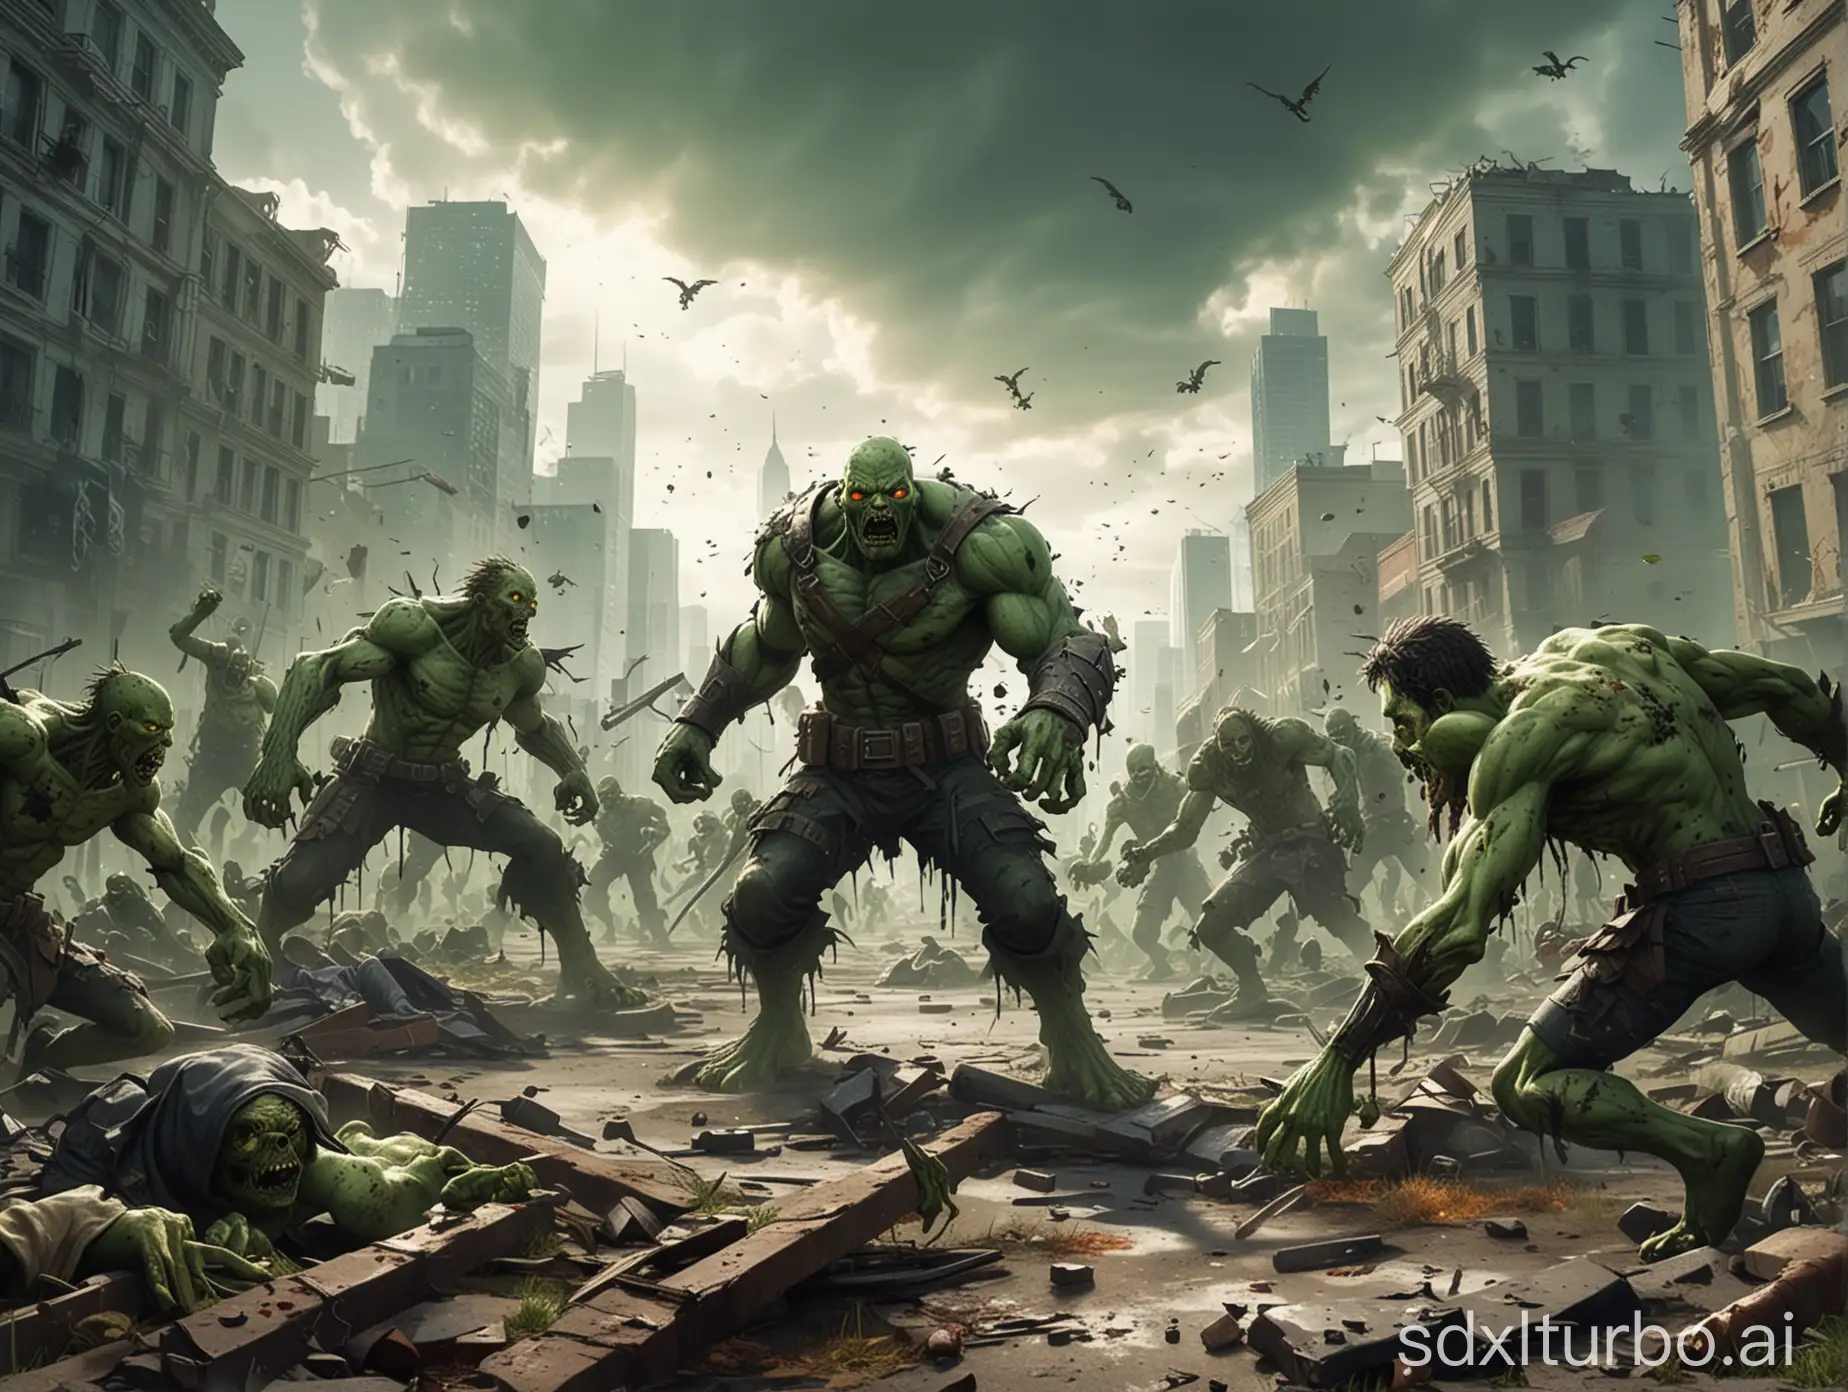 Epic-Battle-Cartoon-Characters-vs-Green-Zombies-in-City-Battlefield